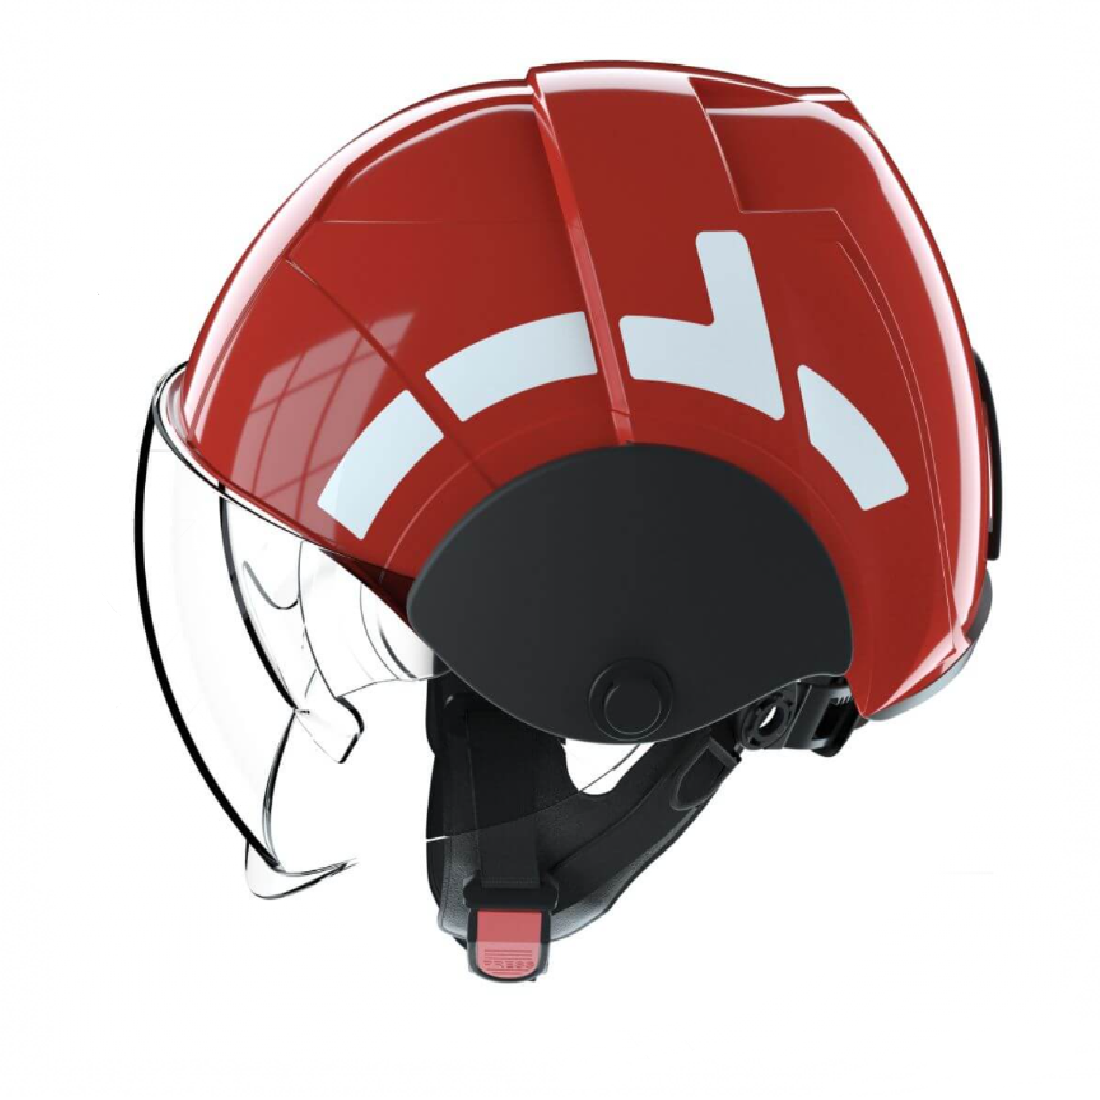 PAB Fire Compact FLAME RETARDANT Helmet